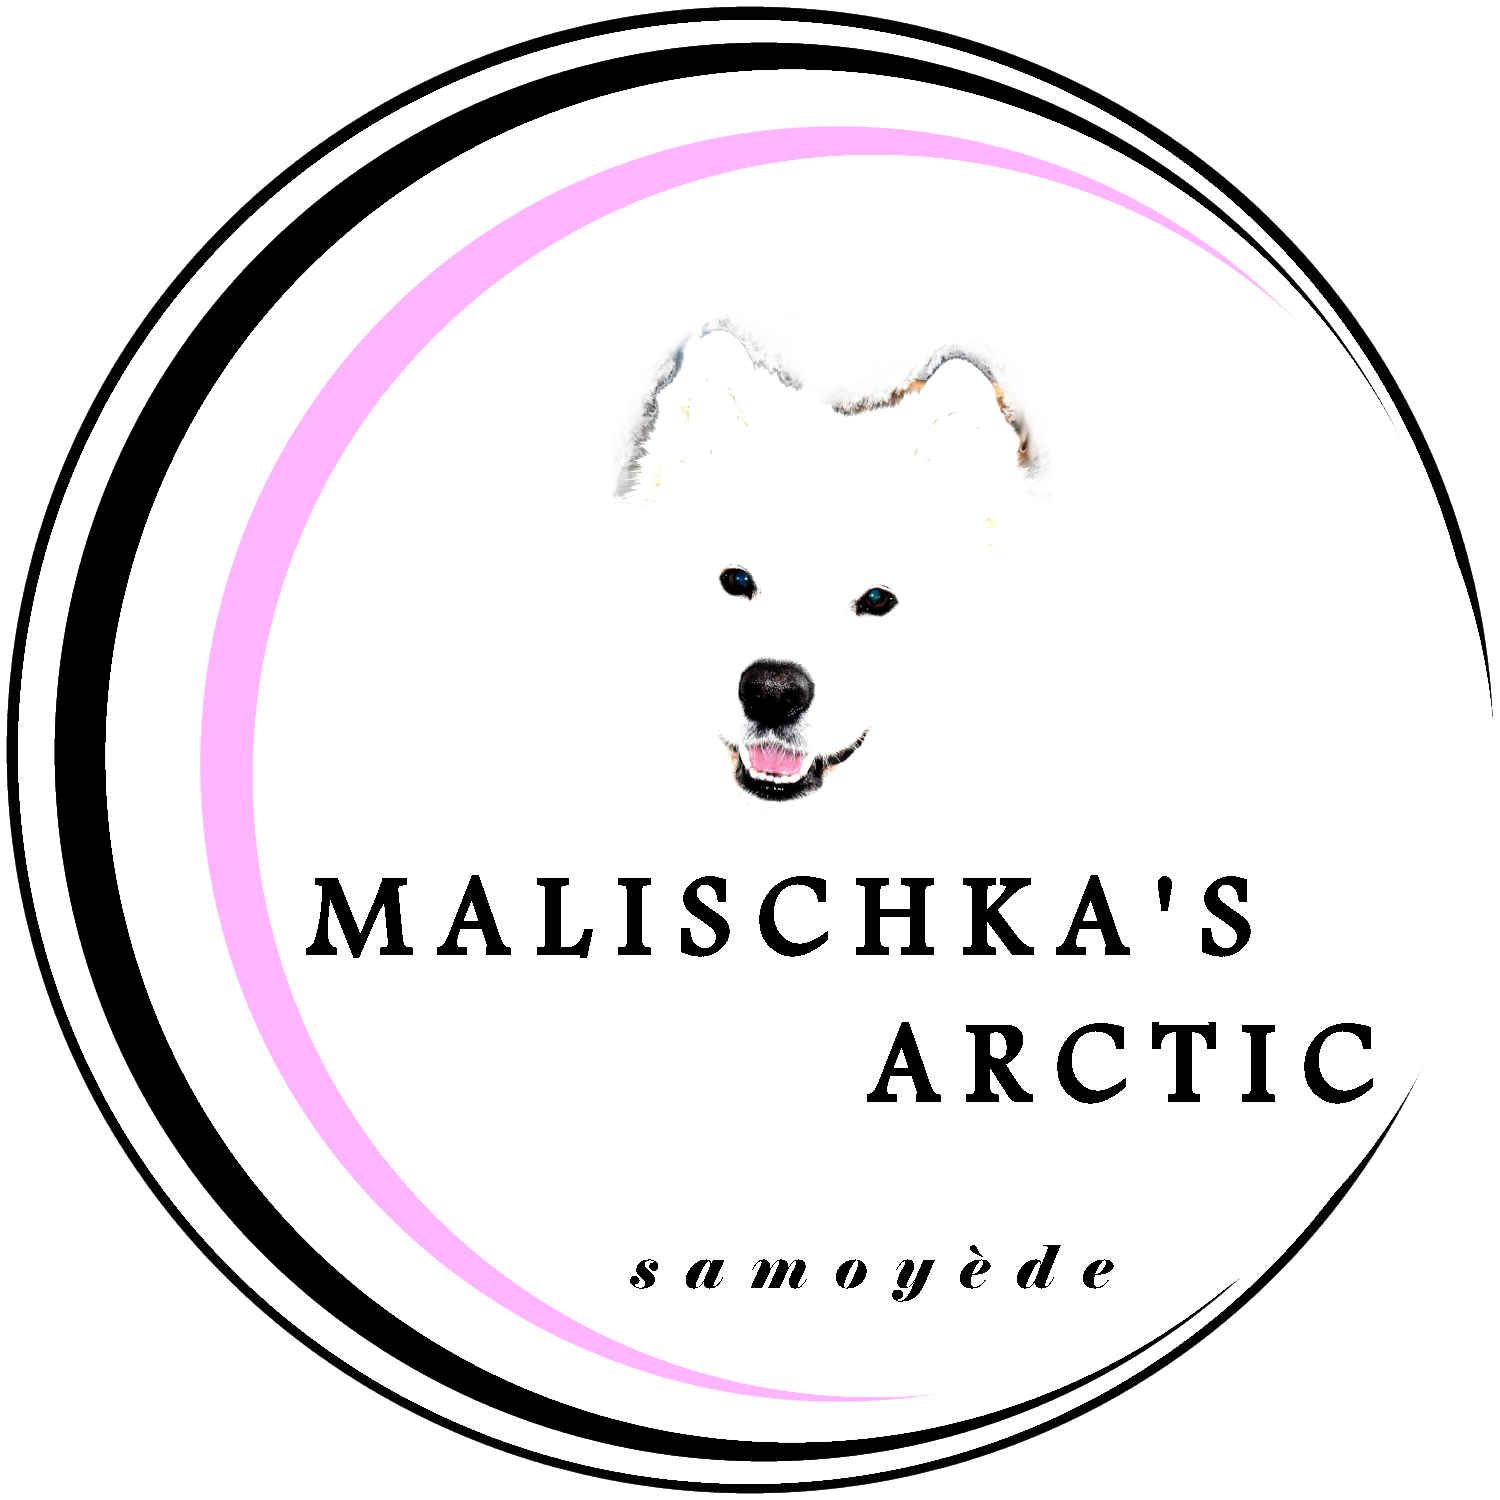 Malischka's Arctic